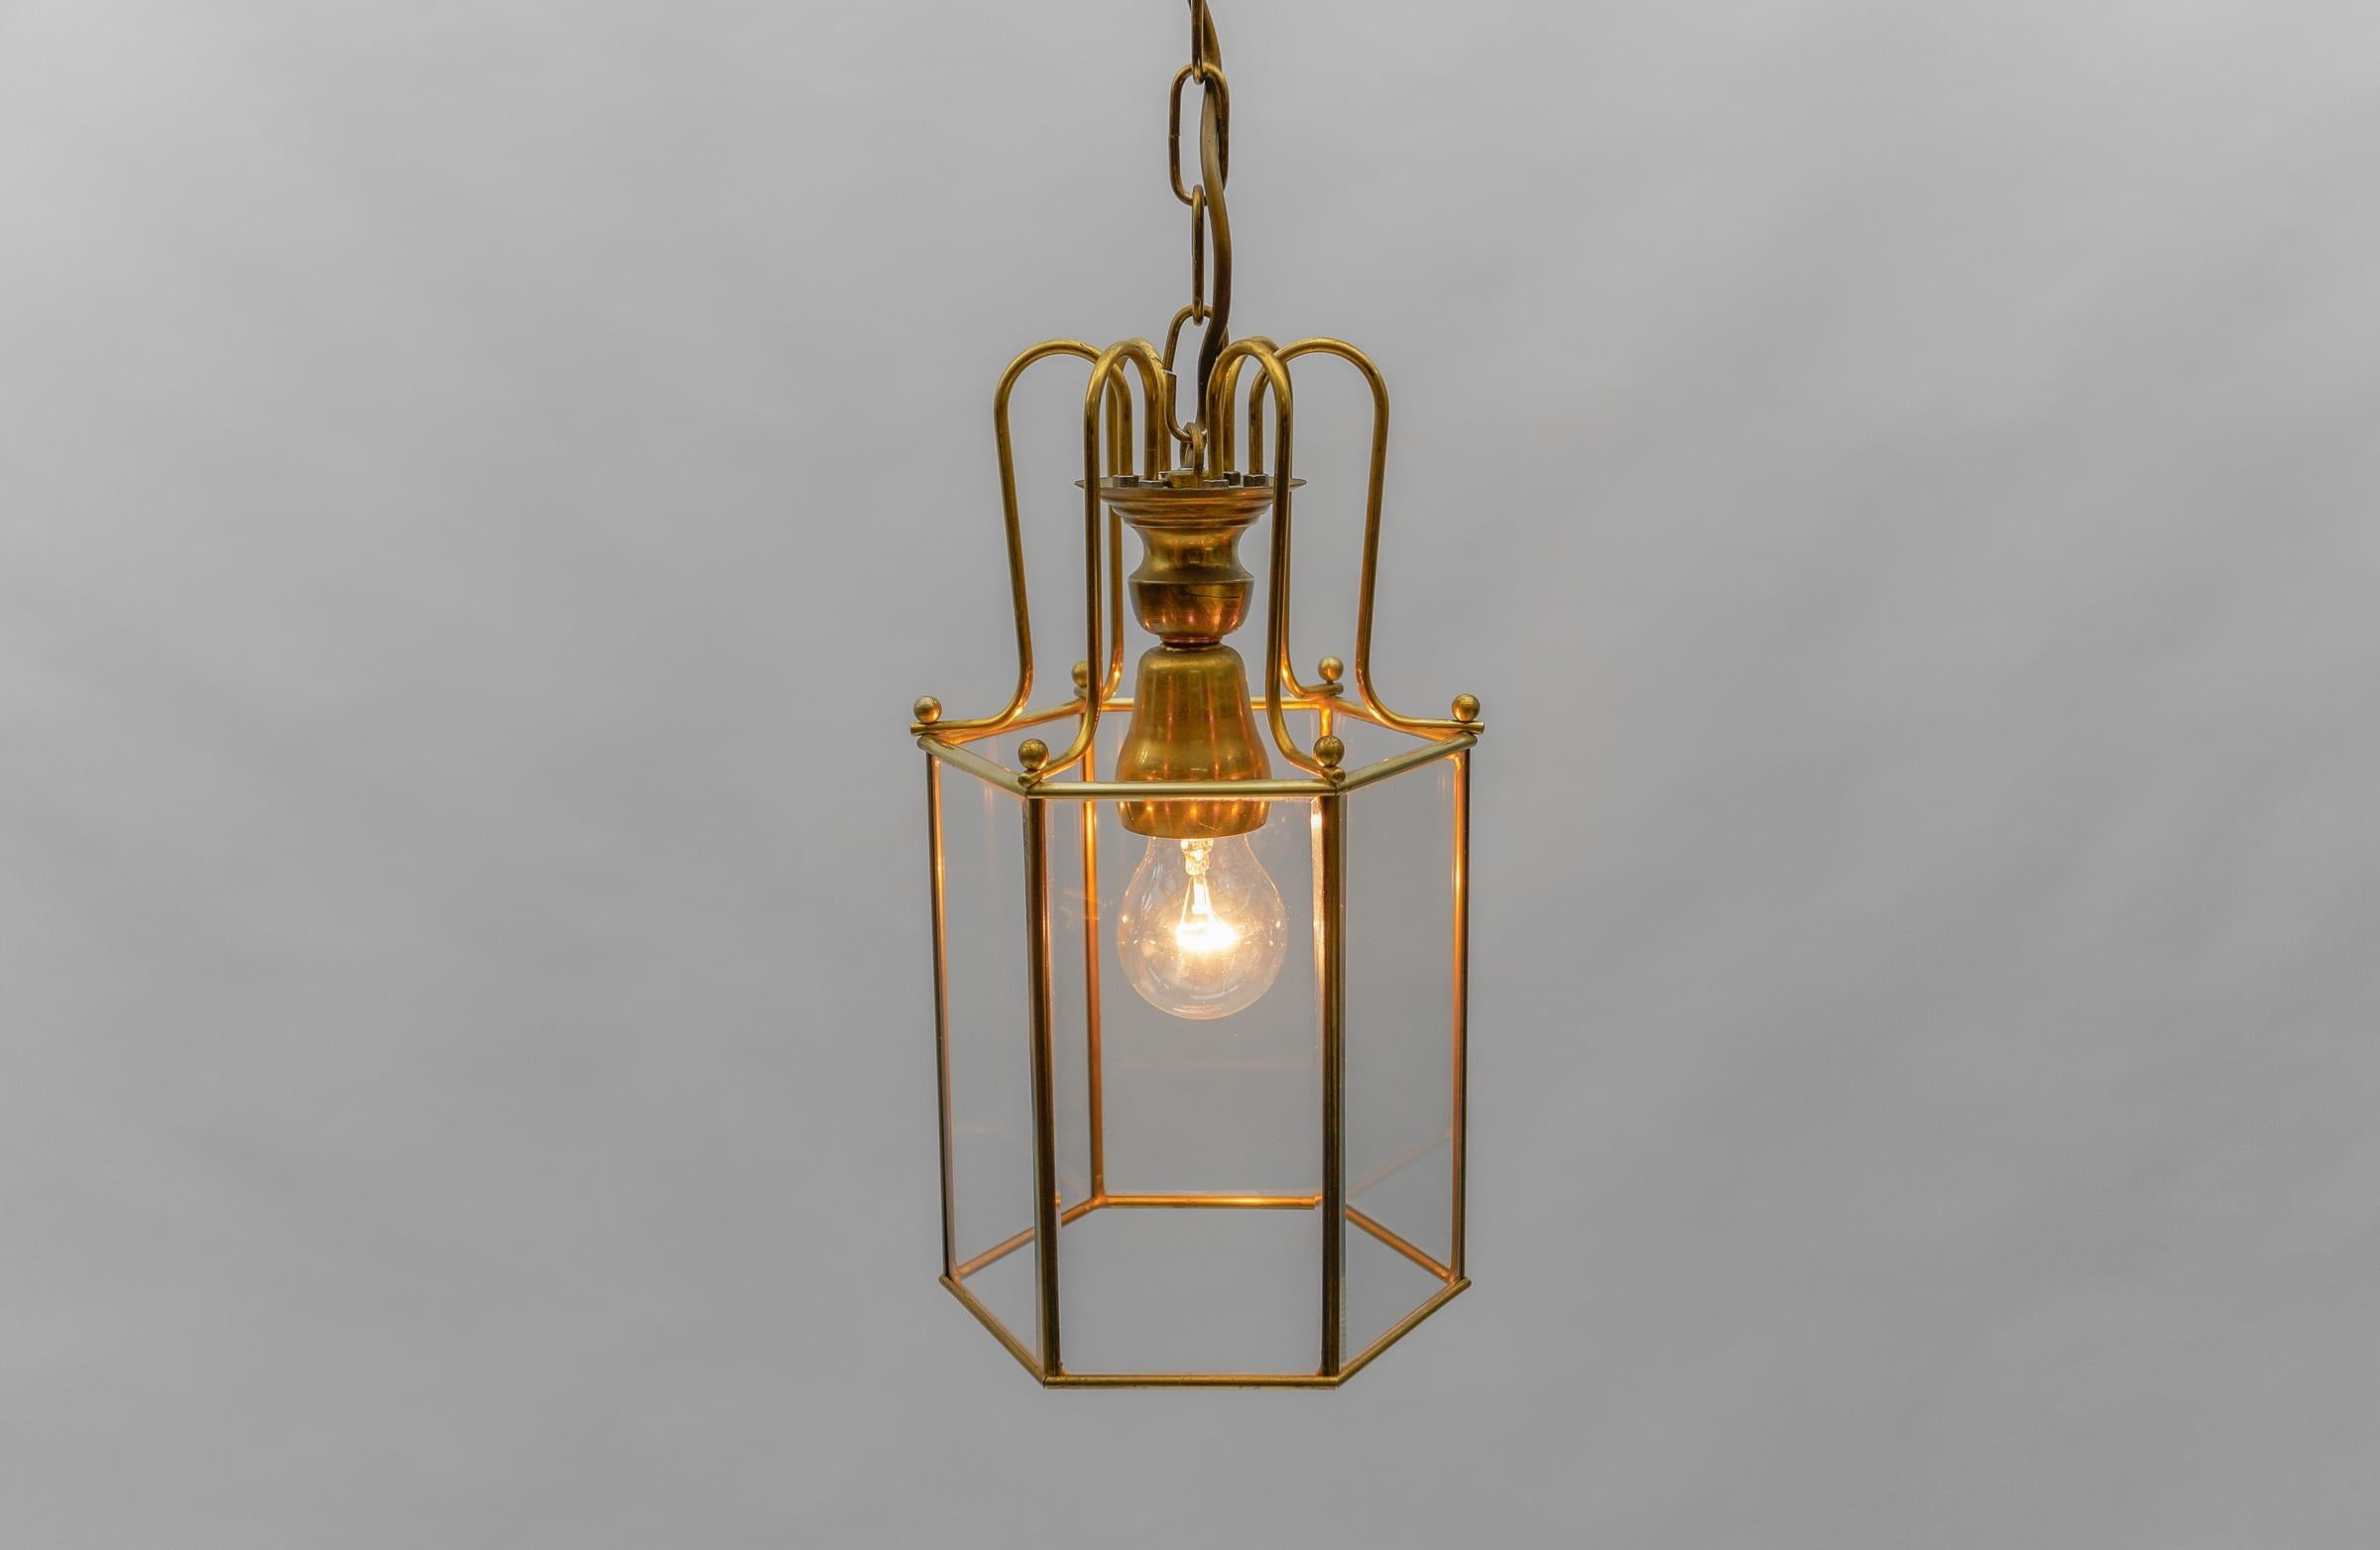 Art Deco Cut Glass Pendant Lamp in Brass, 1940s / 1950s For Sale 1